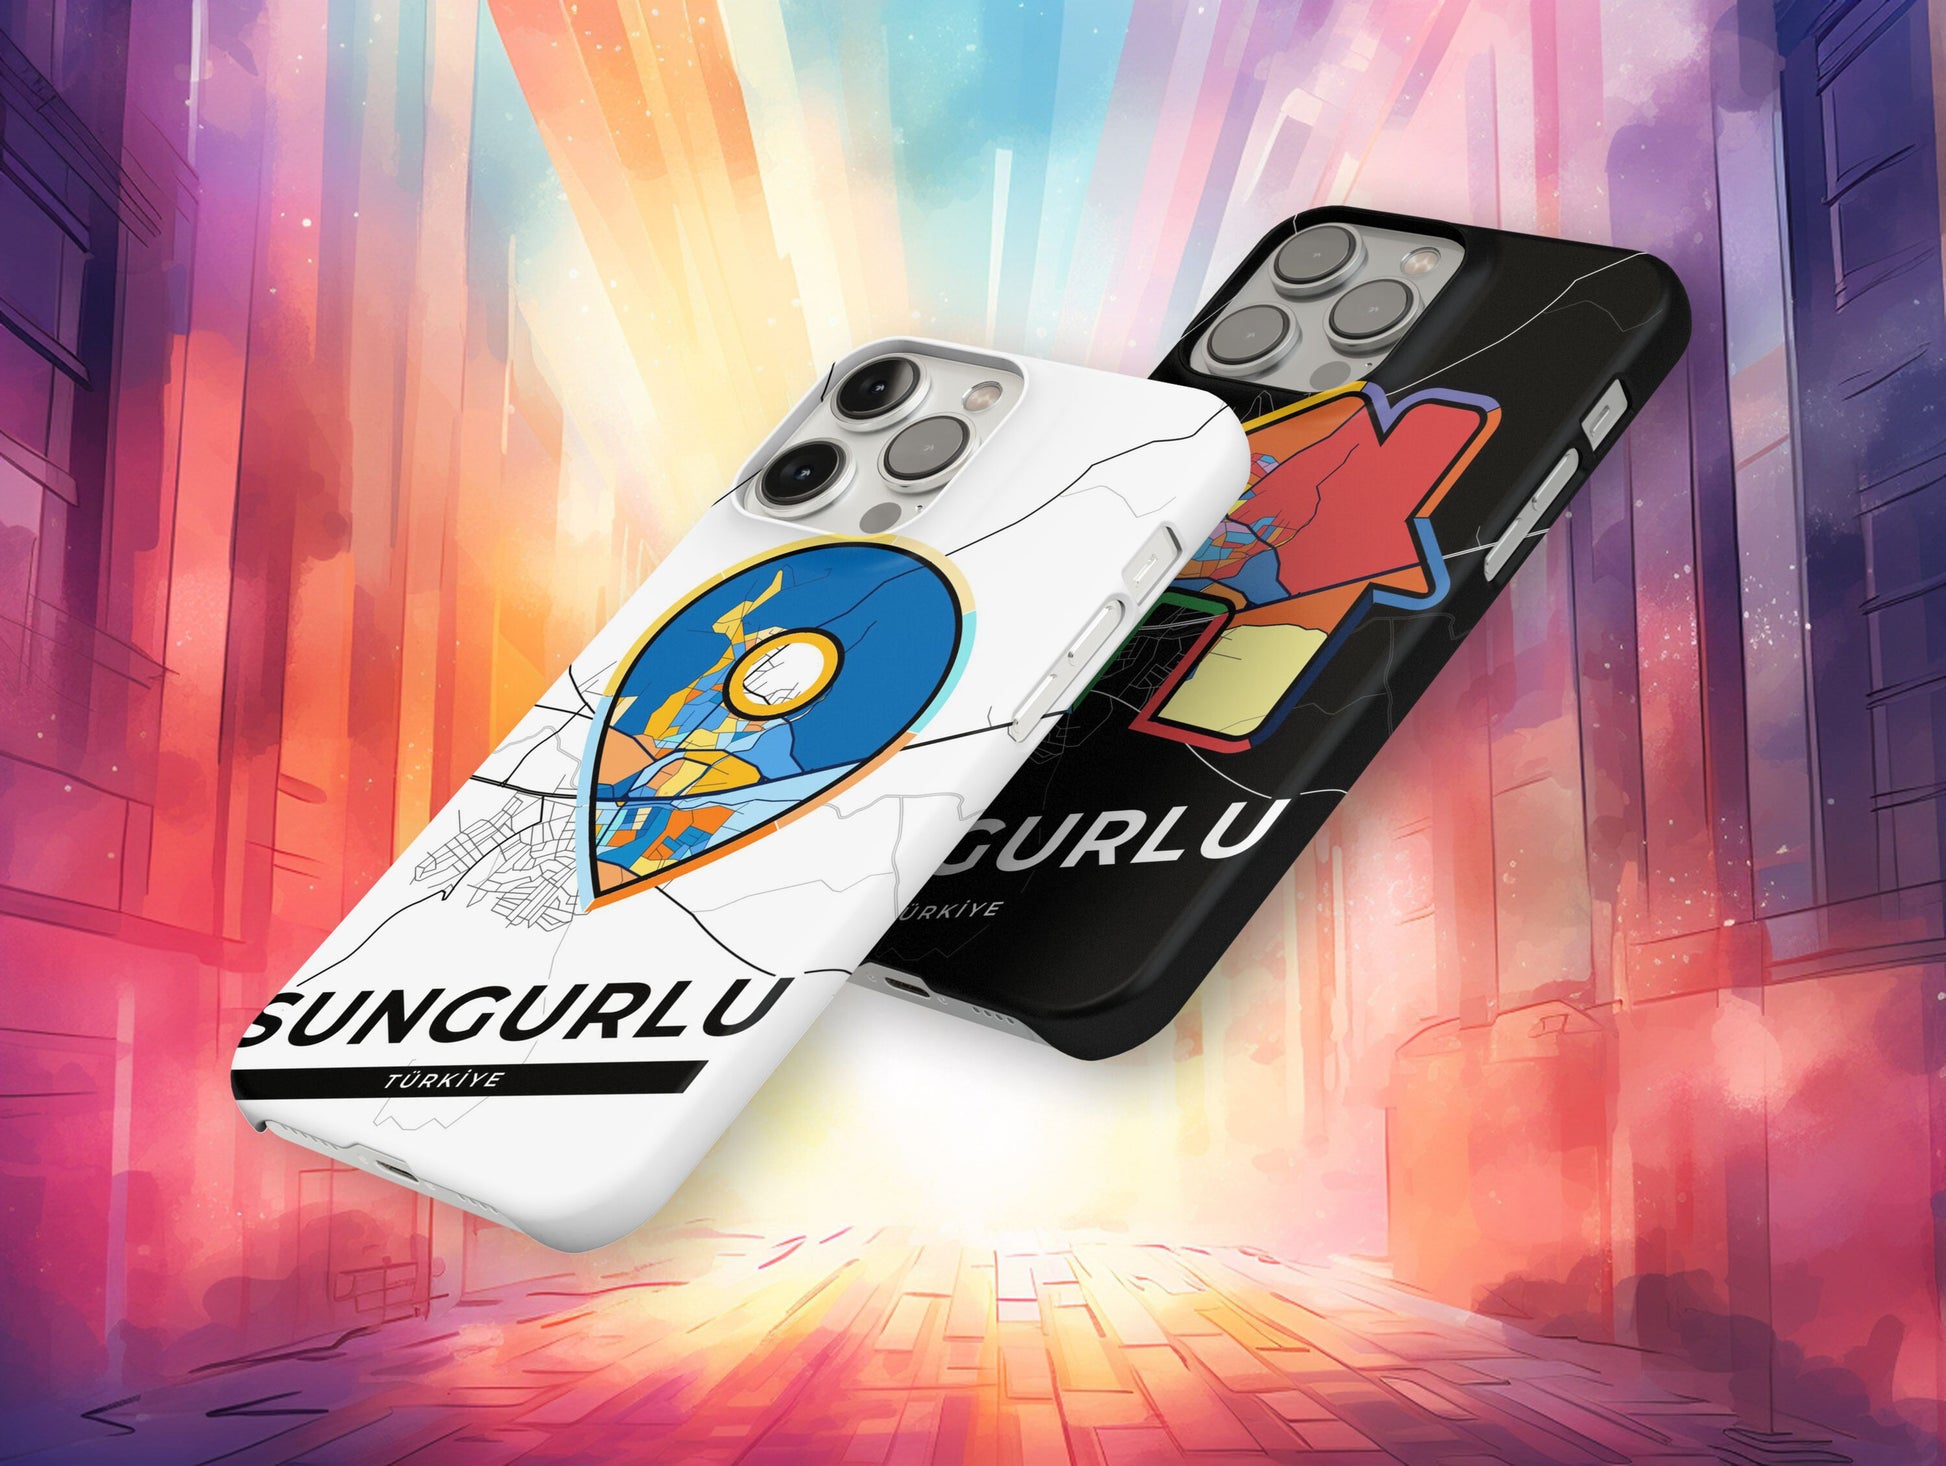 Sungurlu Turkey slim phone case with colorful icon